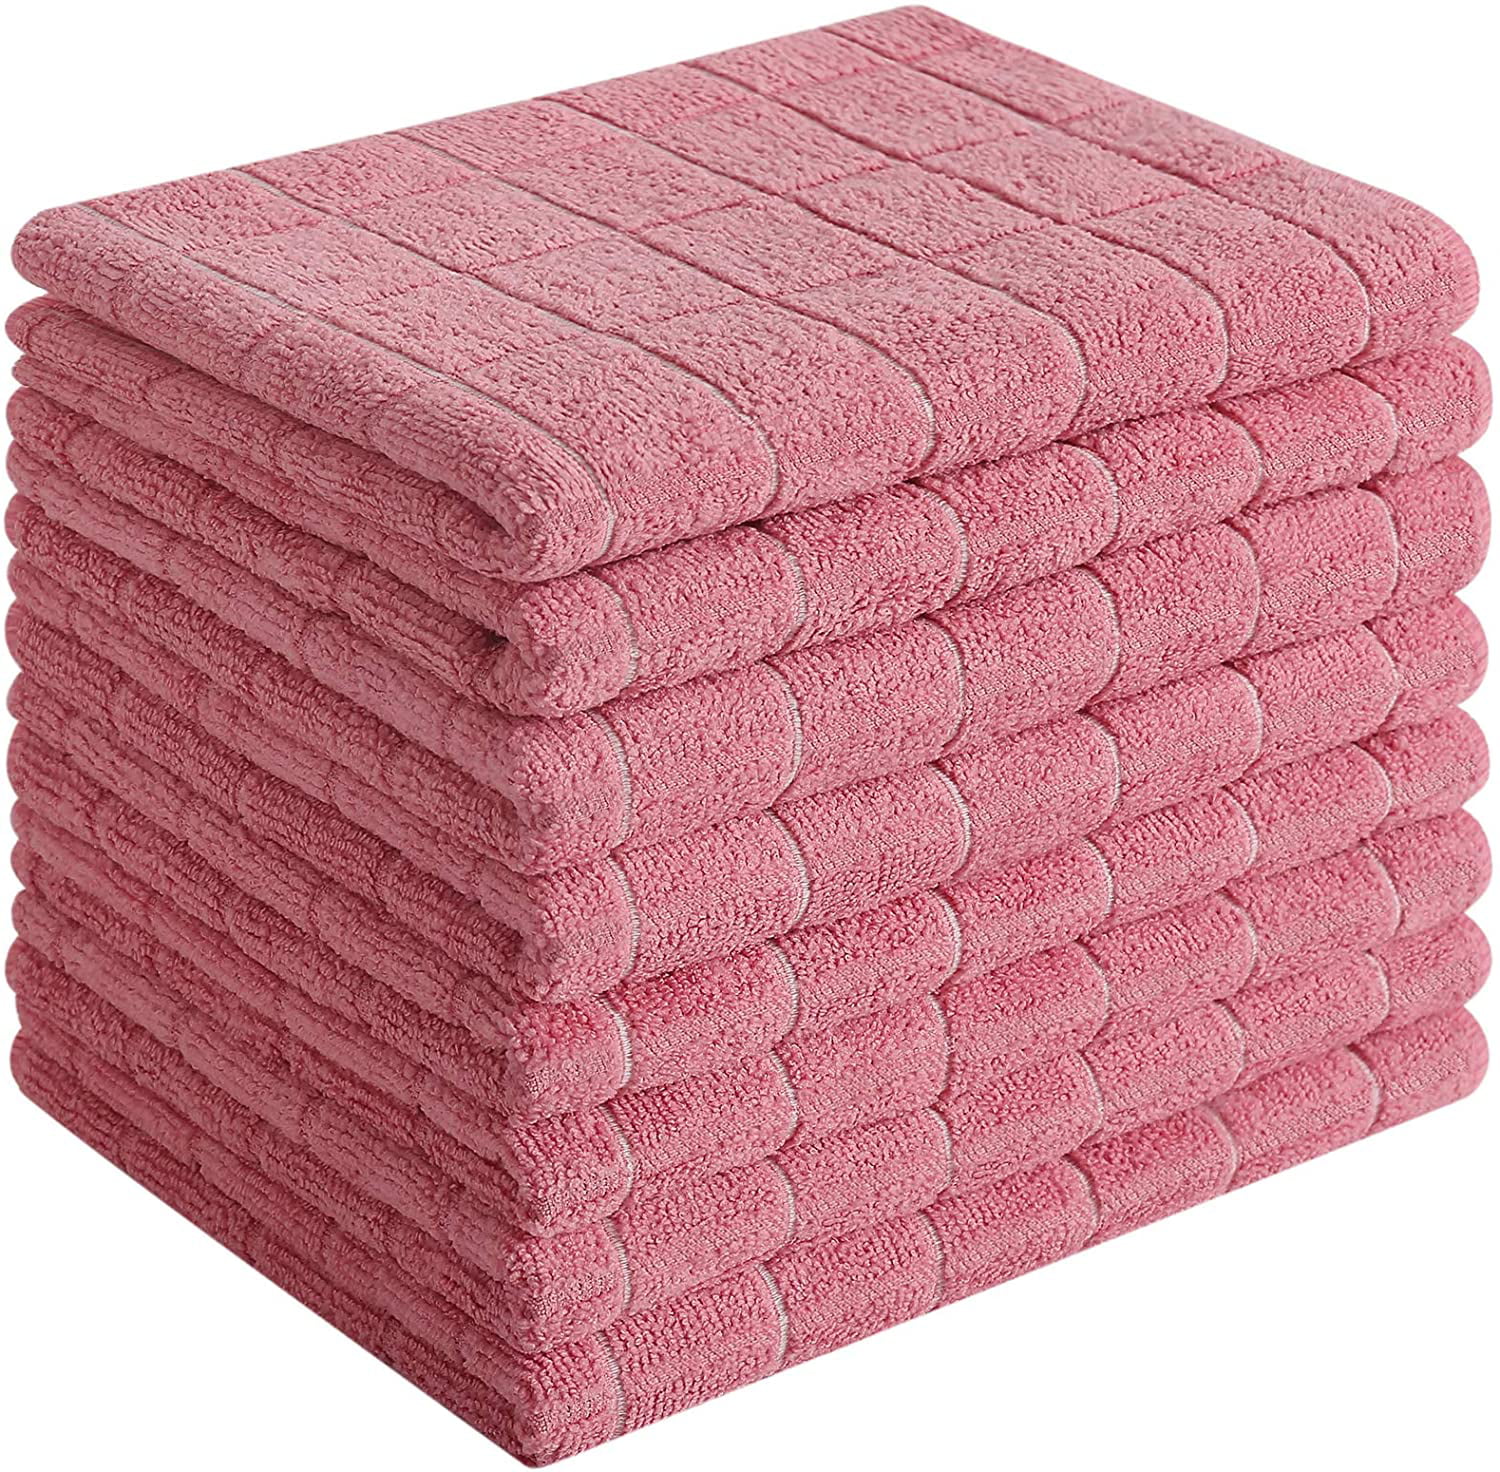 8 Soft Super Absorbent and Lint Free Kitchen Towels Microfiber Dish Towels 